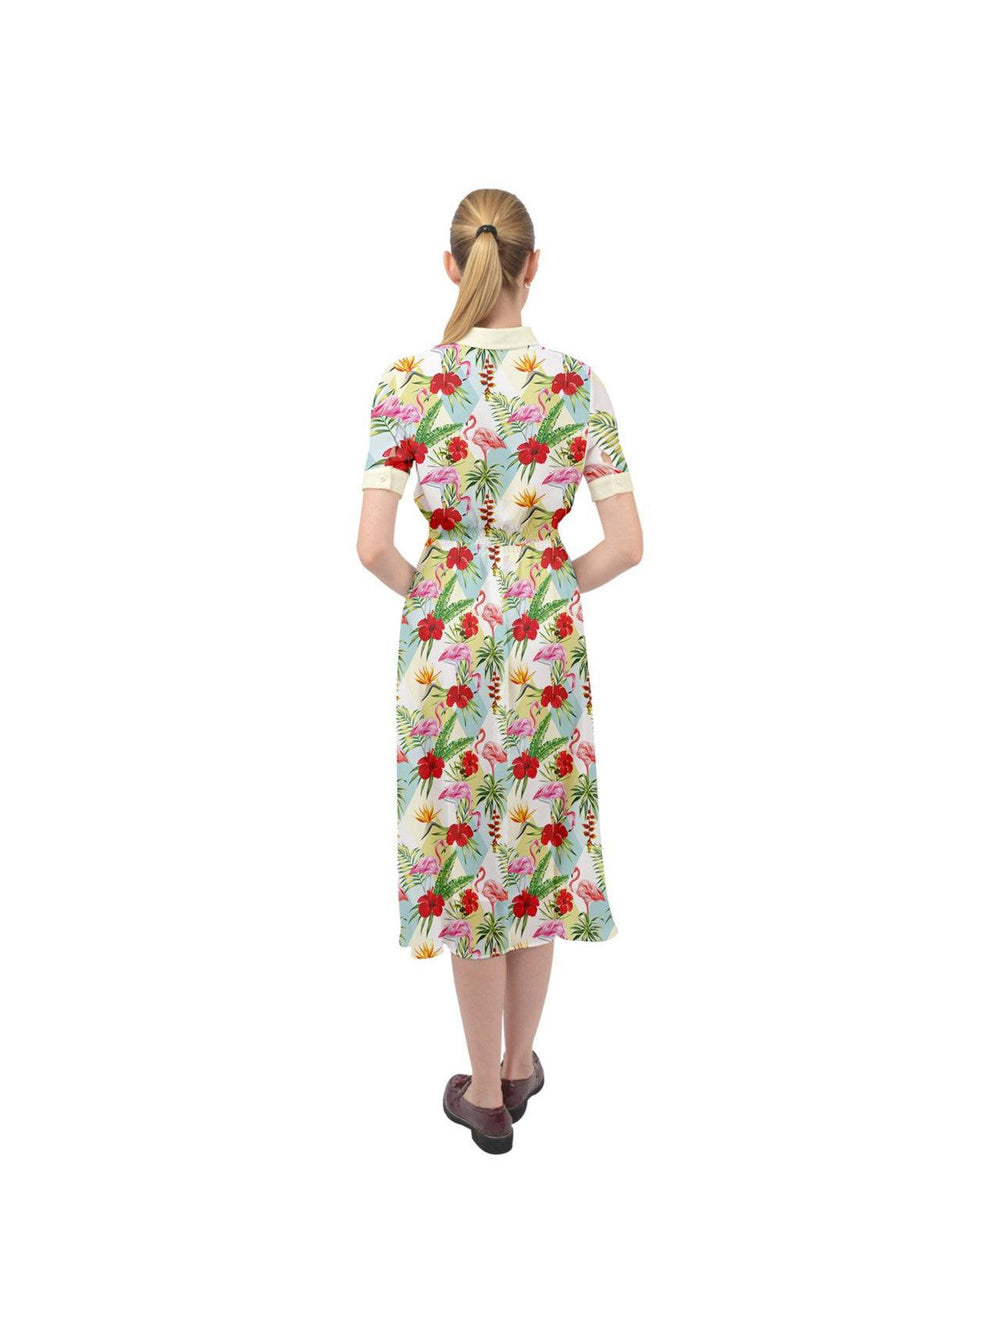 Flamingos Ava 1940s Style Vintage Dress